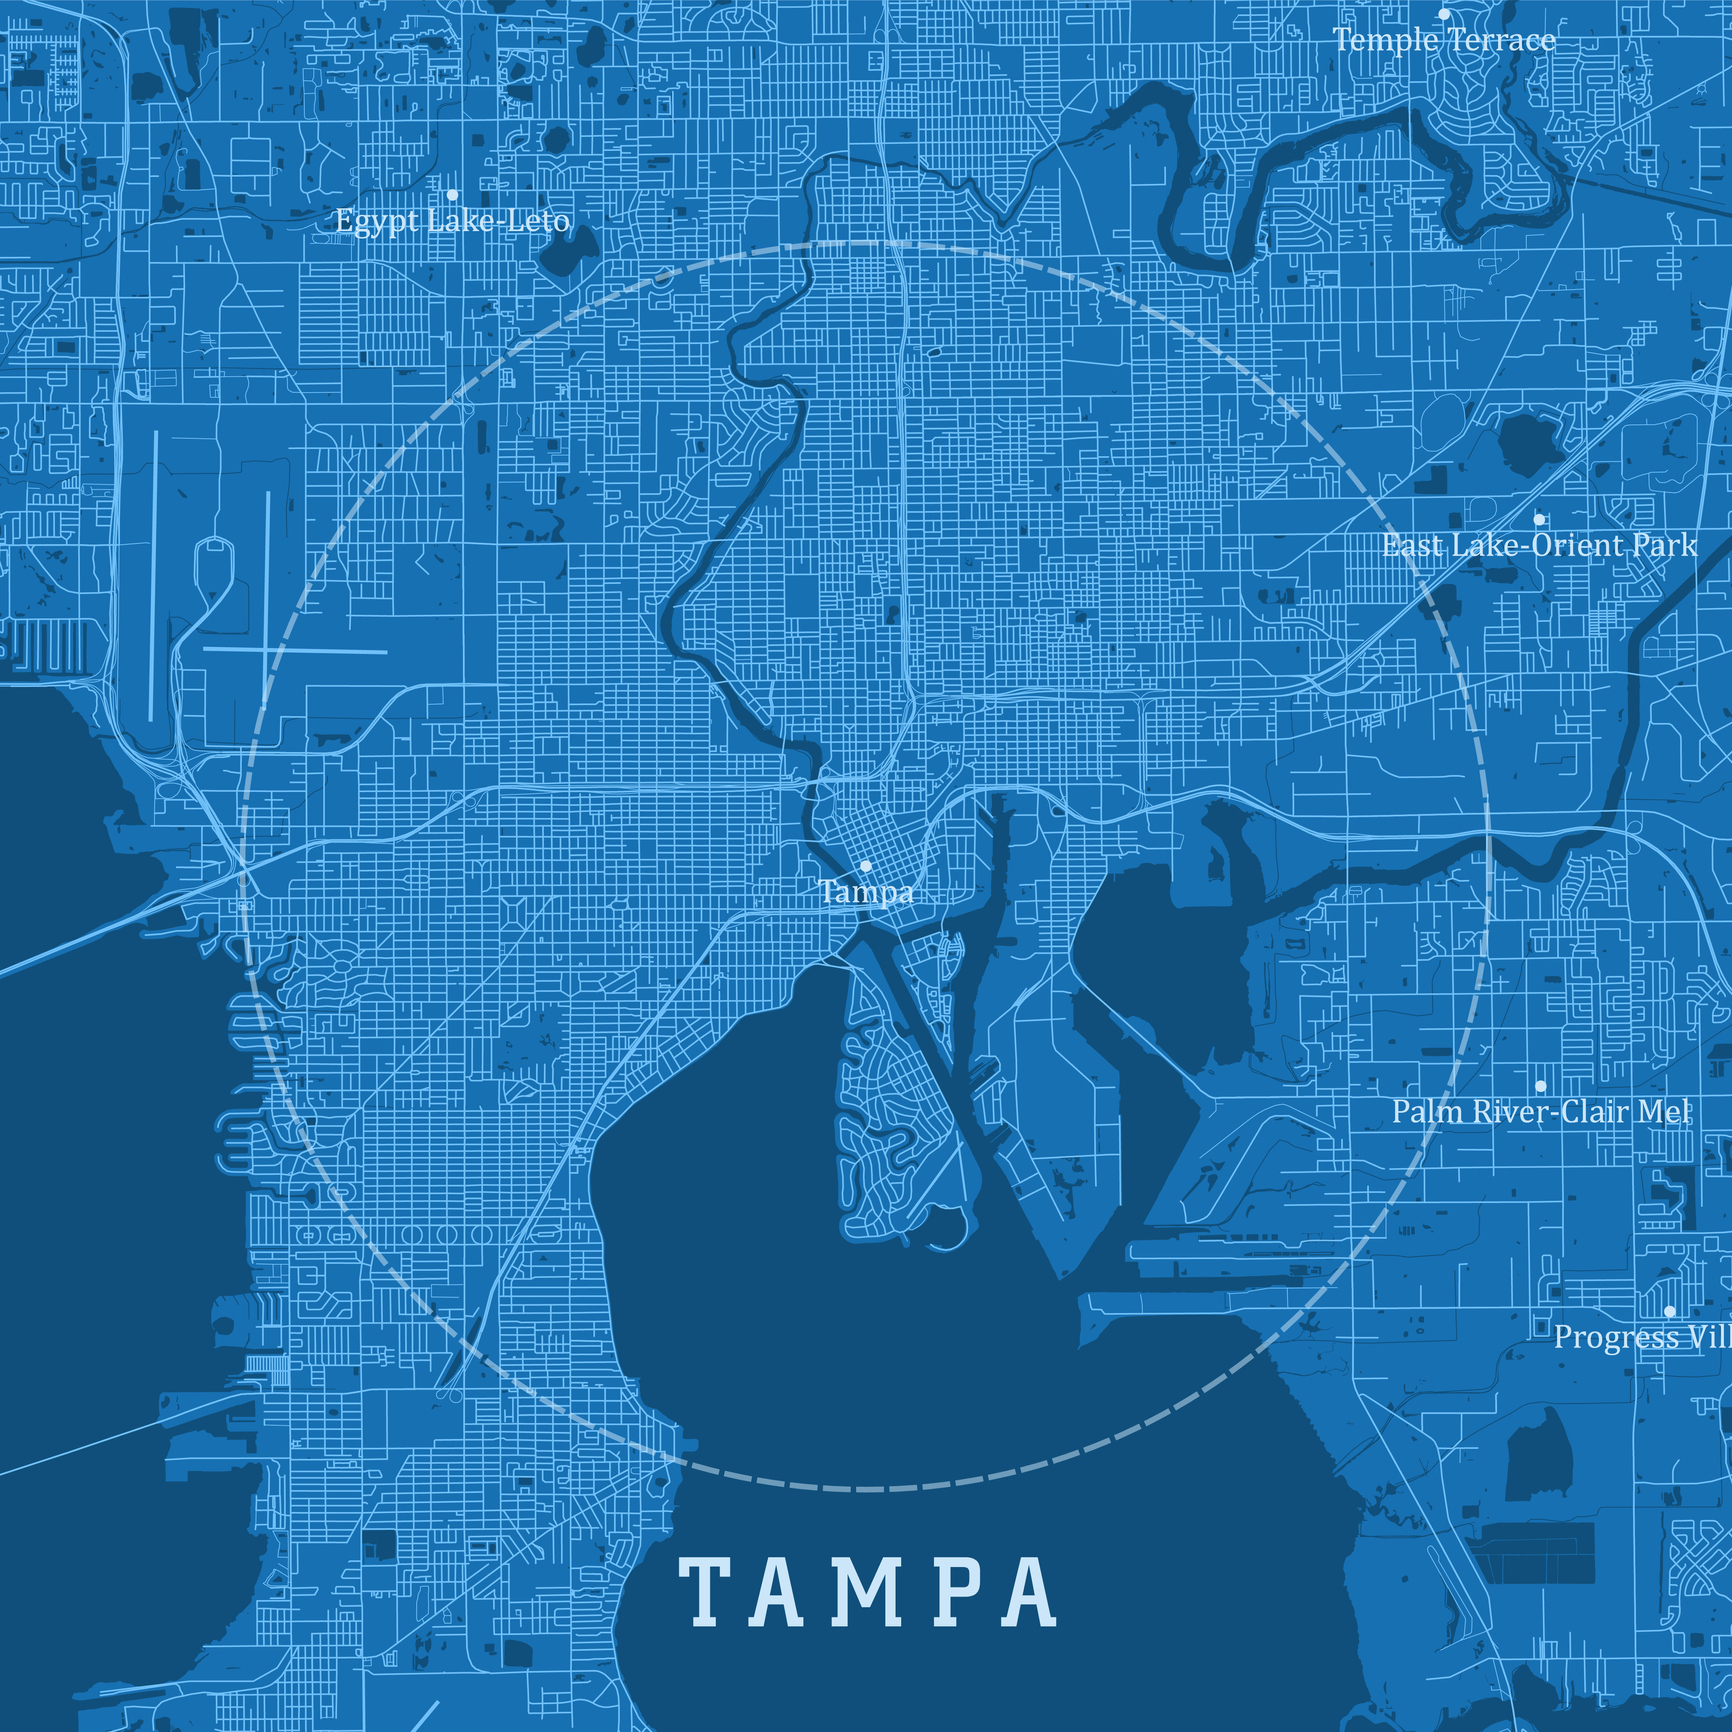 Black Cubans in Tampa’s Cuban Independence Struggle